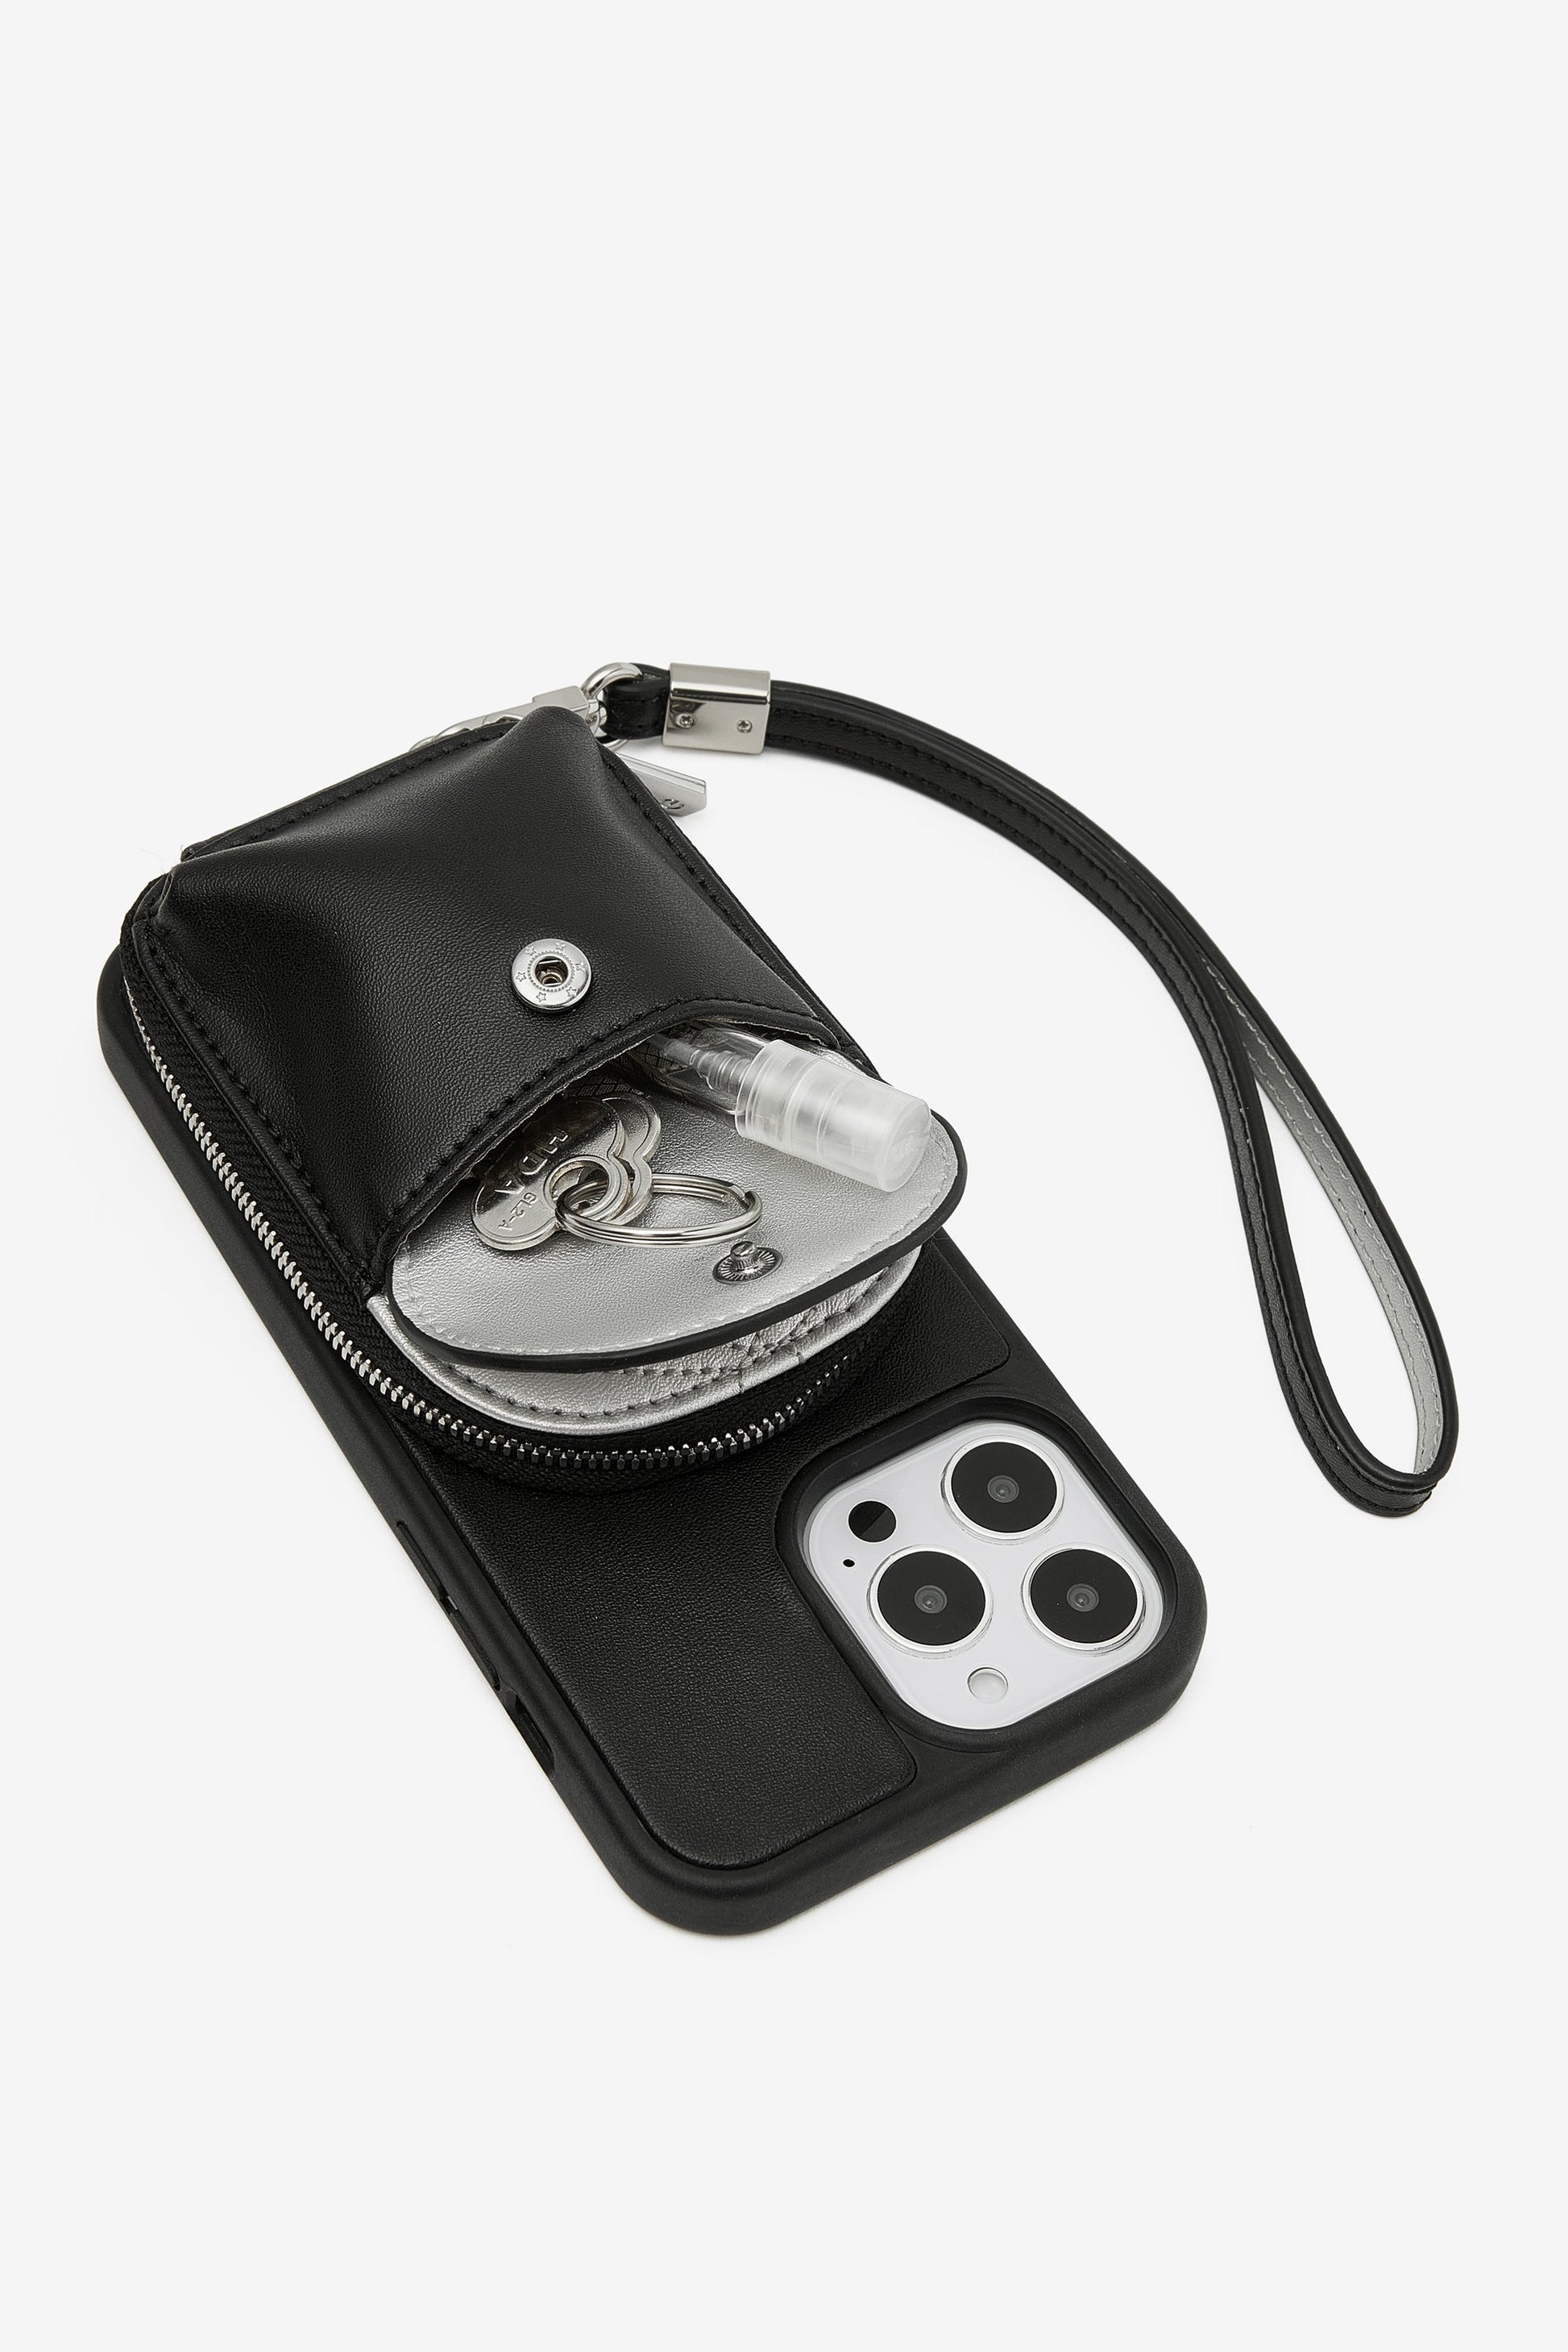 Unique Baseball Cap Phone Case iPhone Crossbody Cover Case Wallet Pouch Black